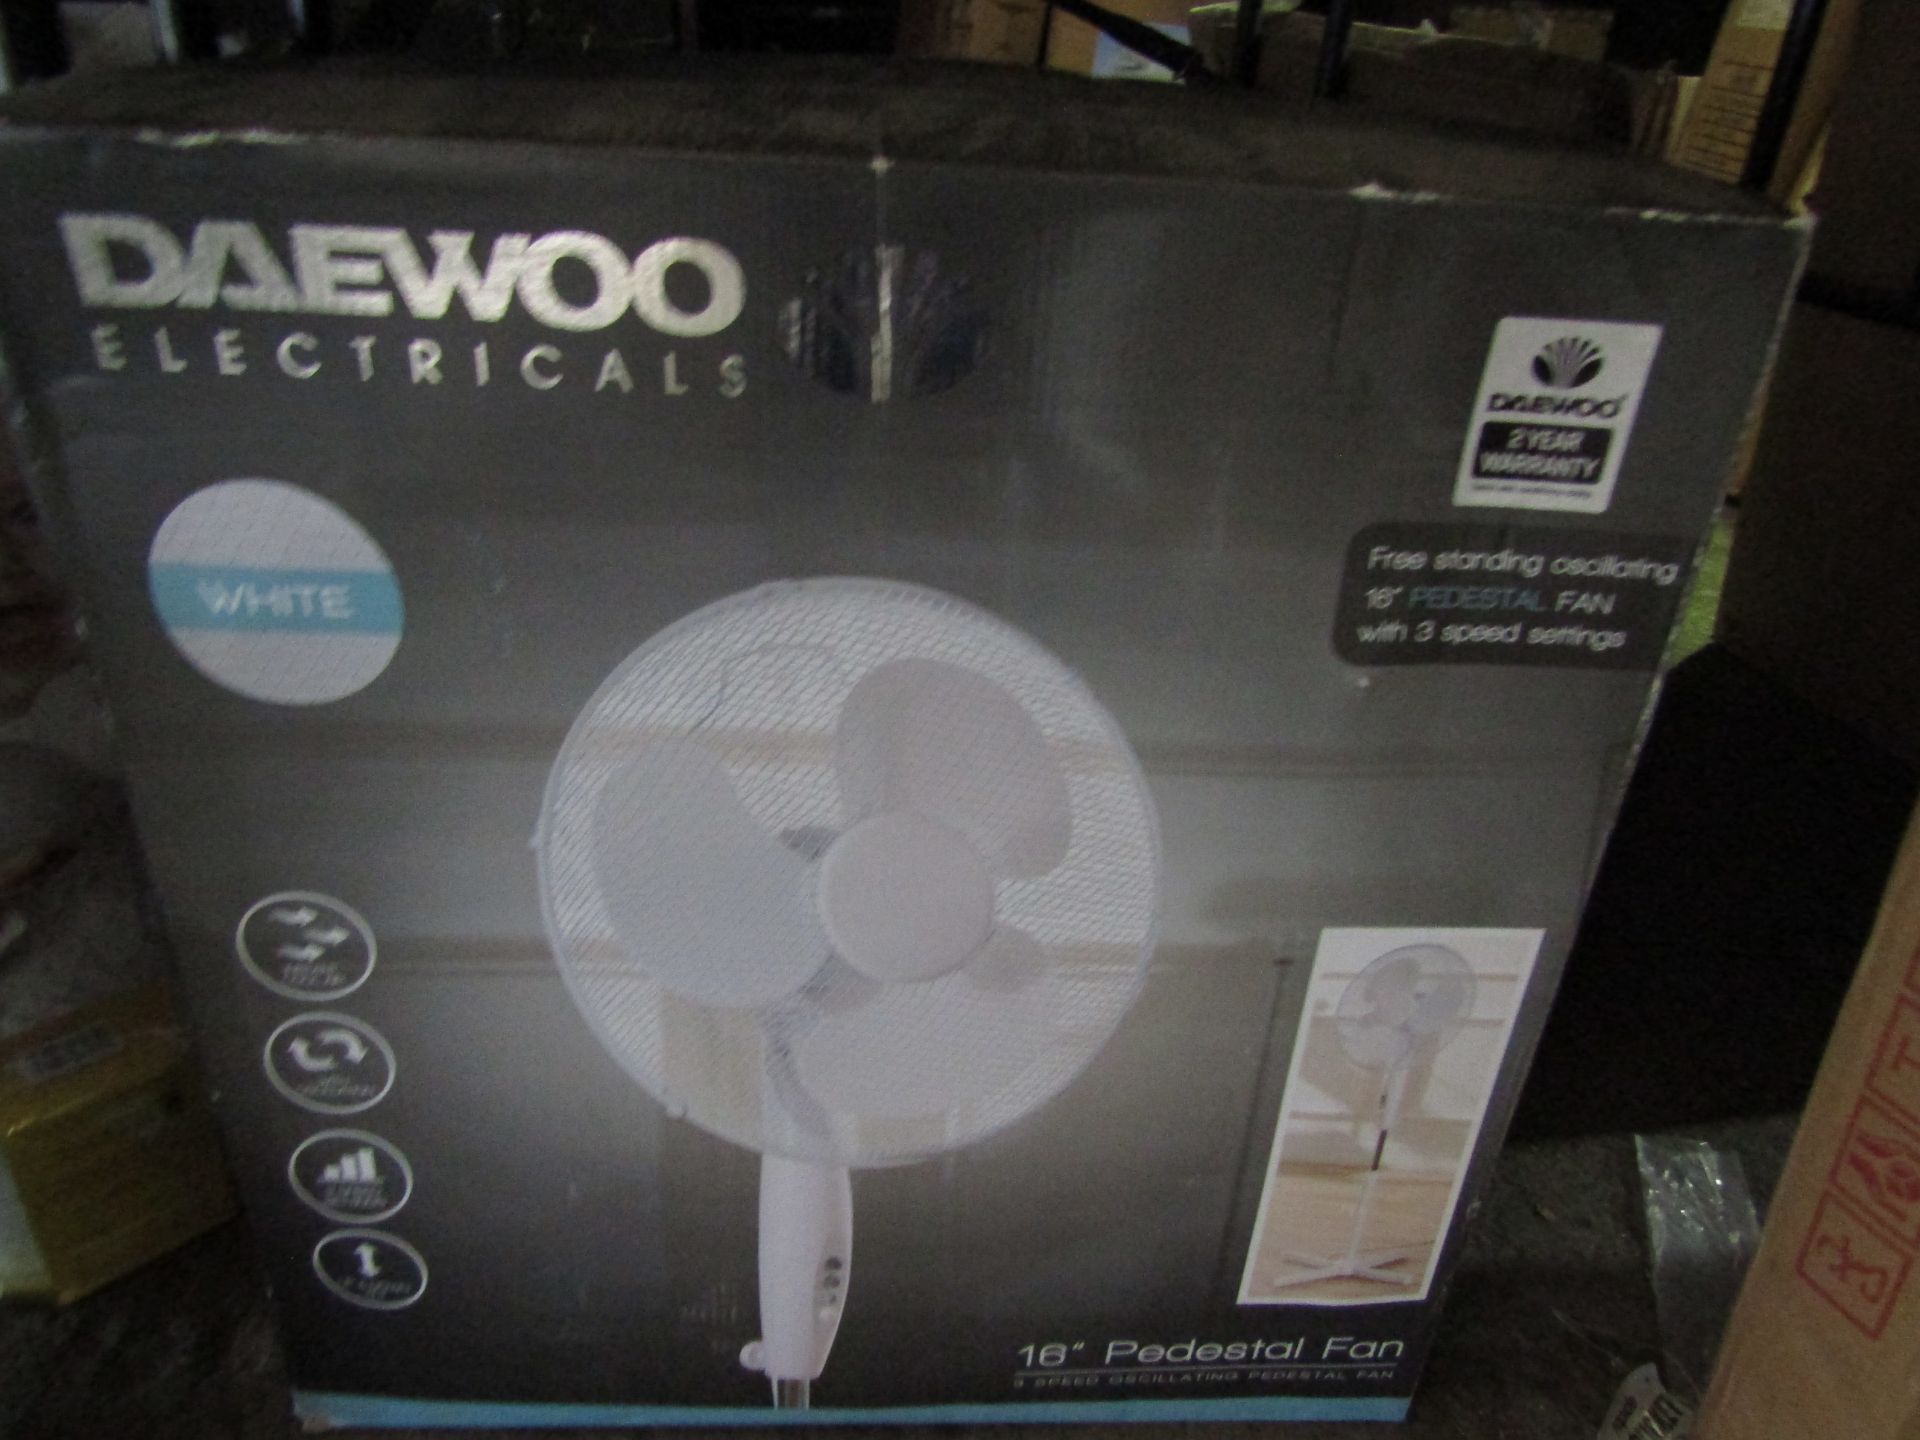 Daewoo 16" Pedestal Fan, White - Unchecked & Boxed.